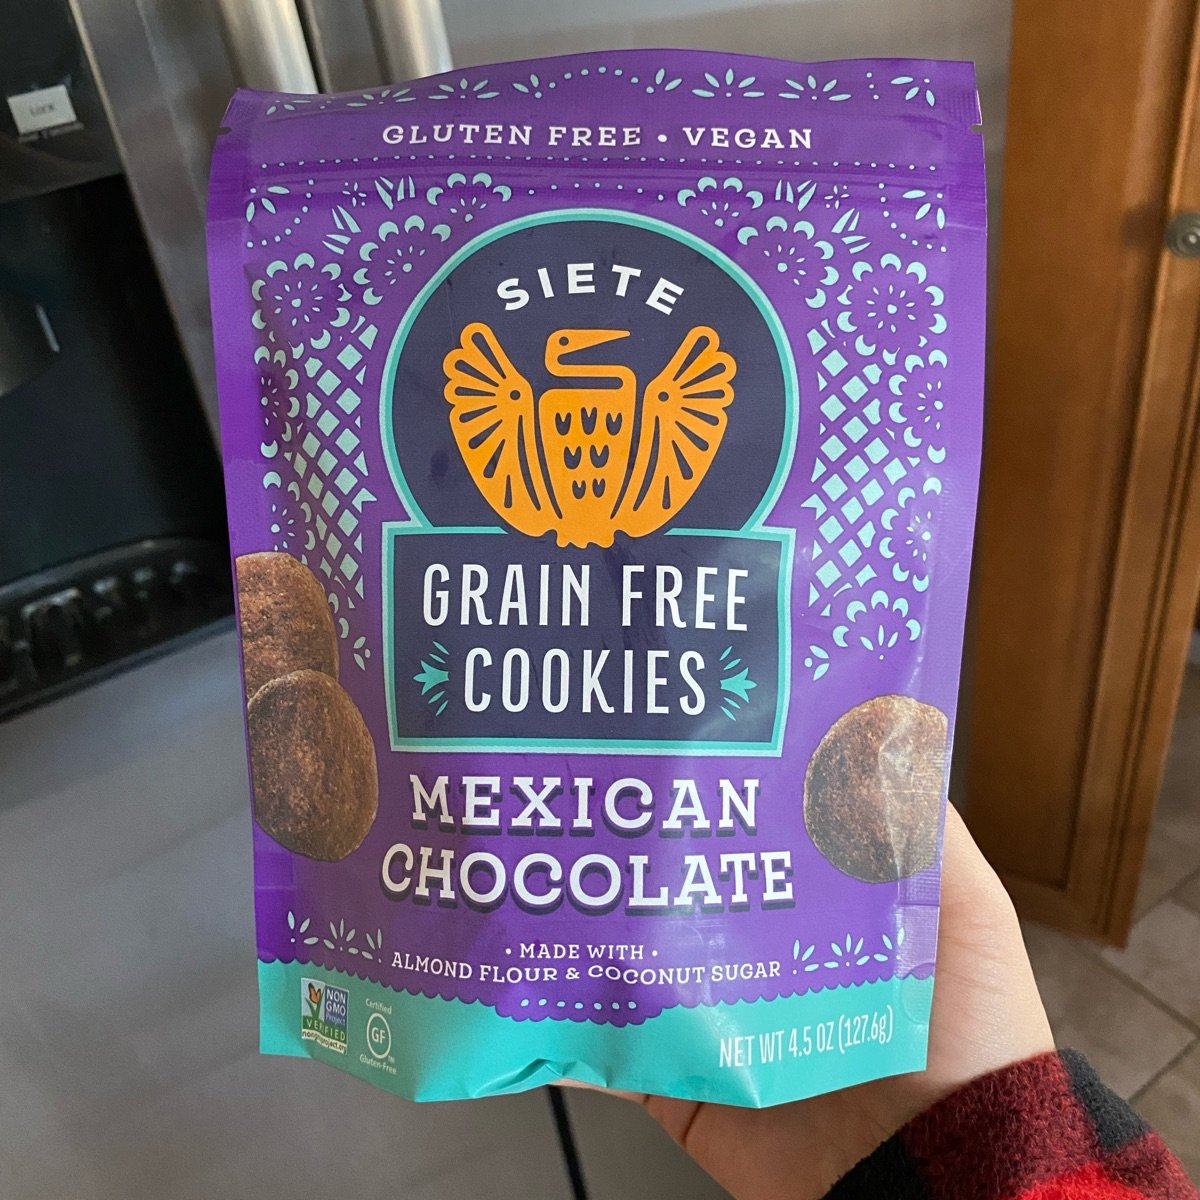 Siete Cookies, Mexican Chocolate, Grain Free - 4.5 oz